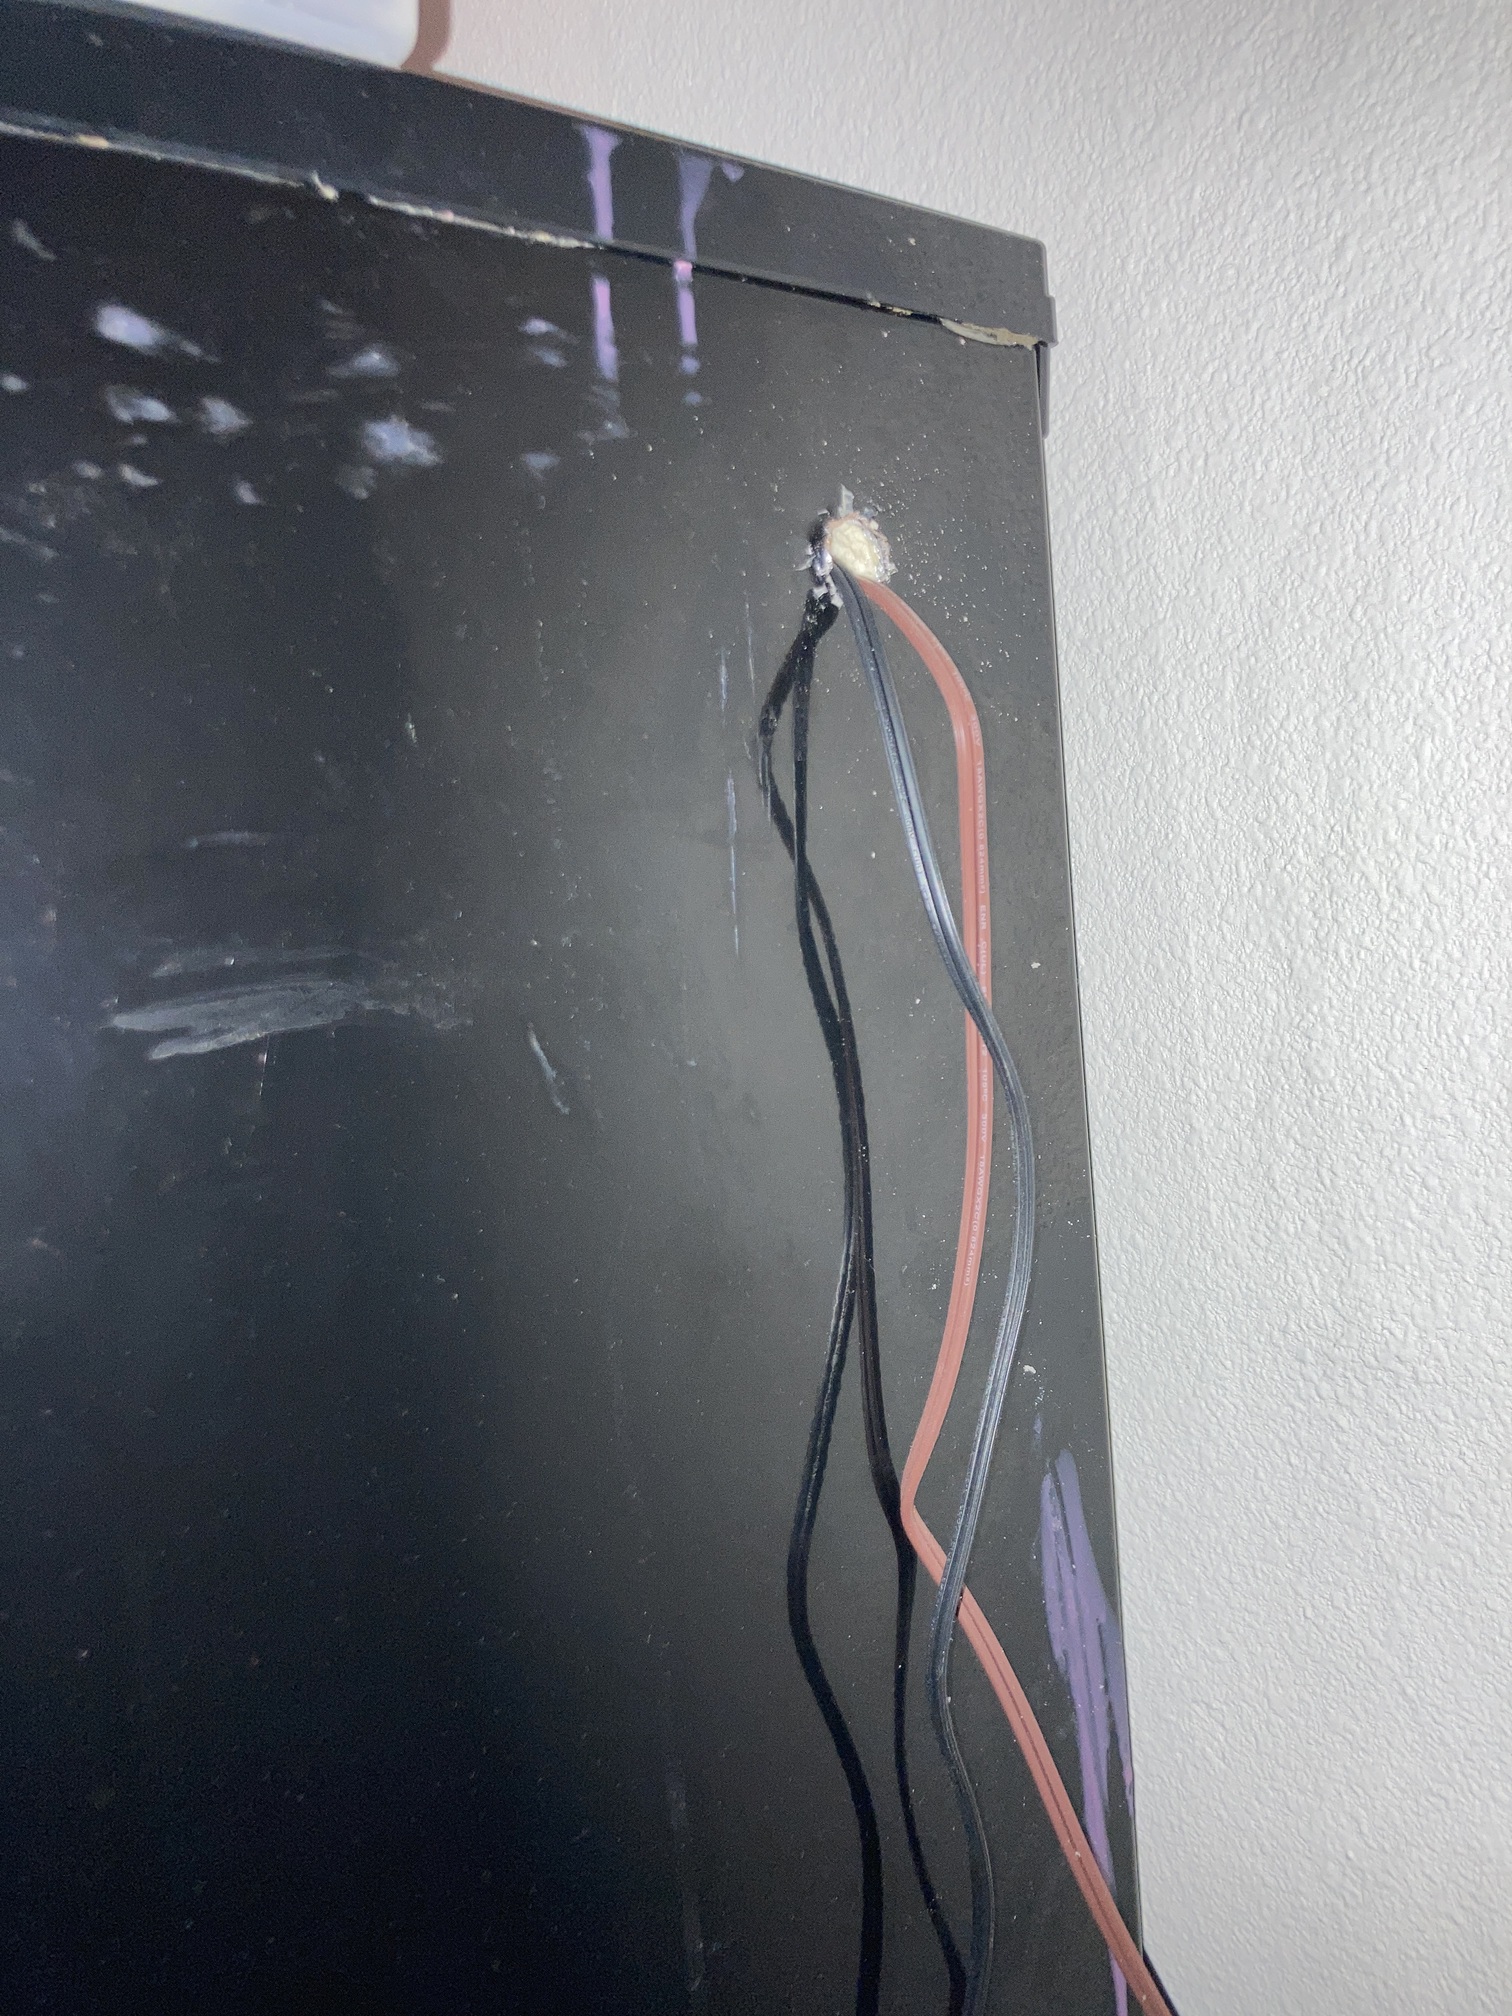 Heat tape versus heat cable? - Enclosures & Setups - MorphMarket Reptile  Community